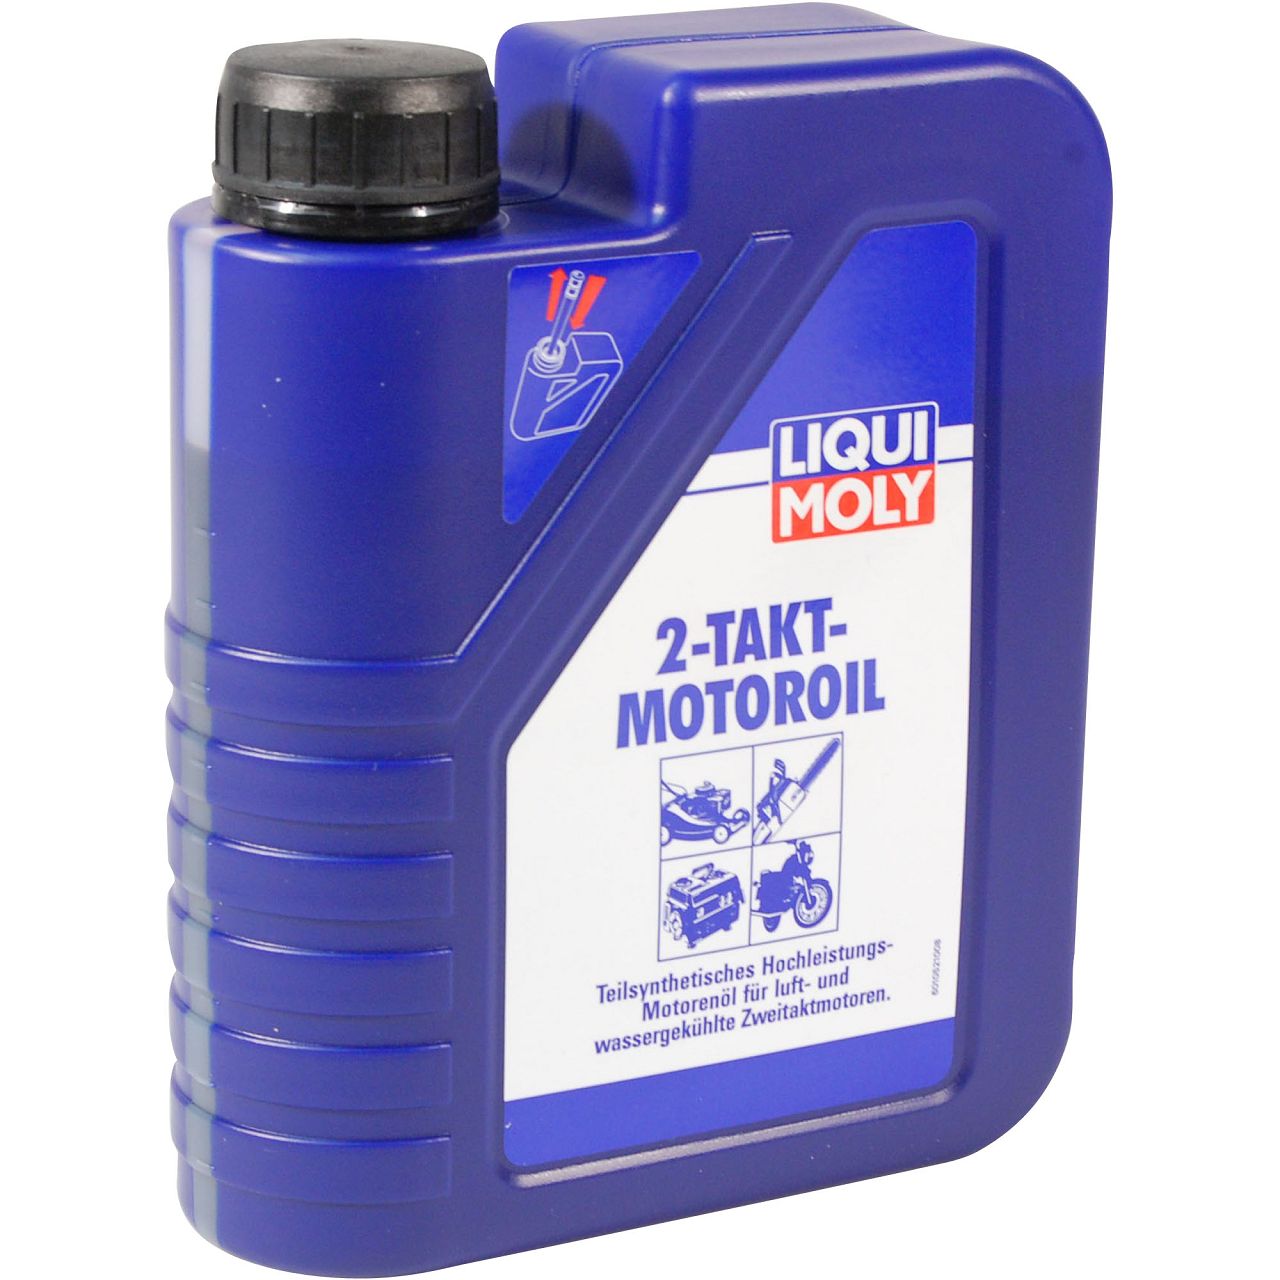 LIQUI MOLY Motoröl Öl 2-Takt-Motoroil selbstmischend 1L 1 Liter